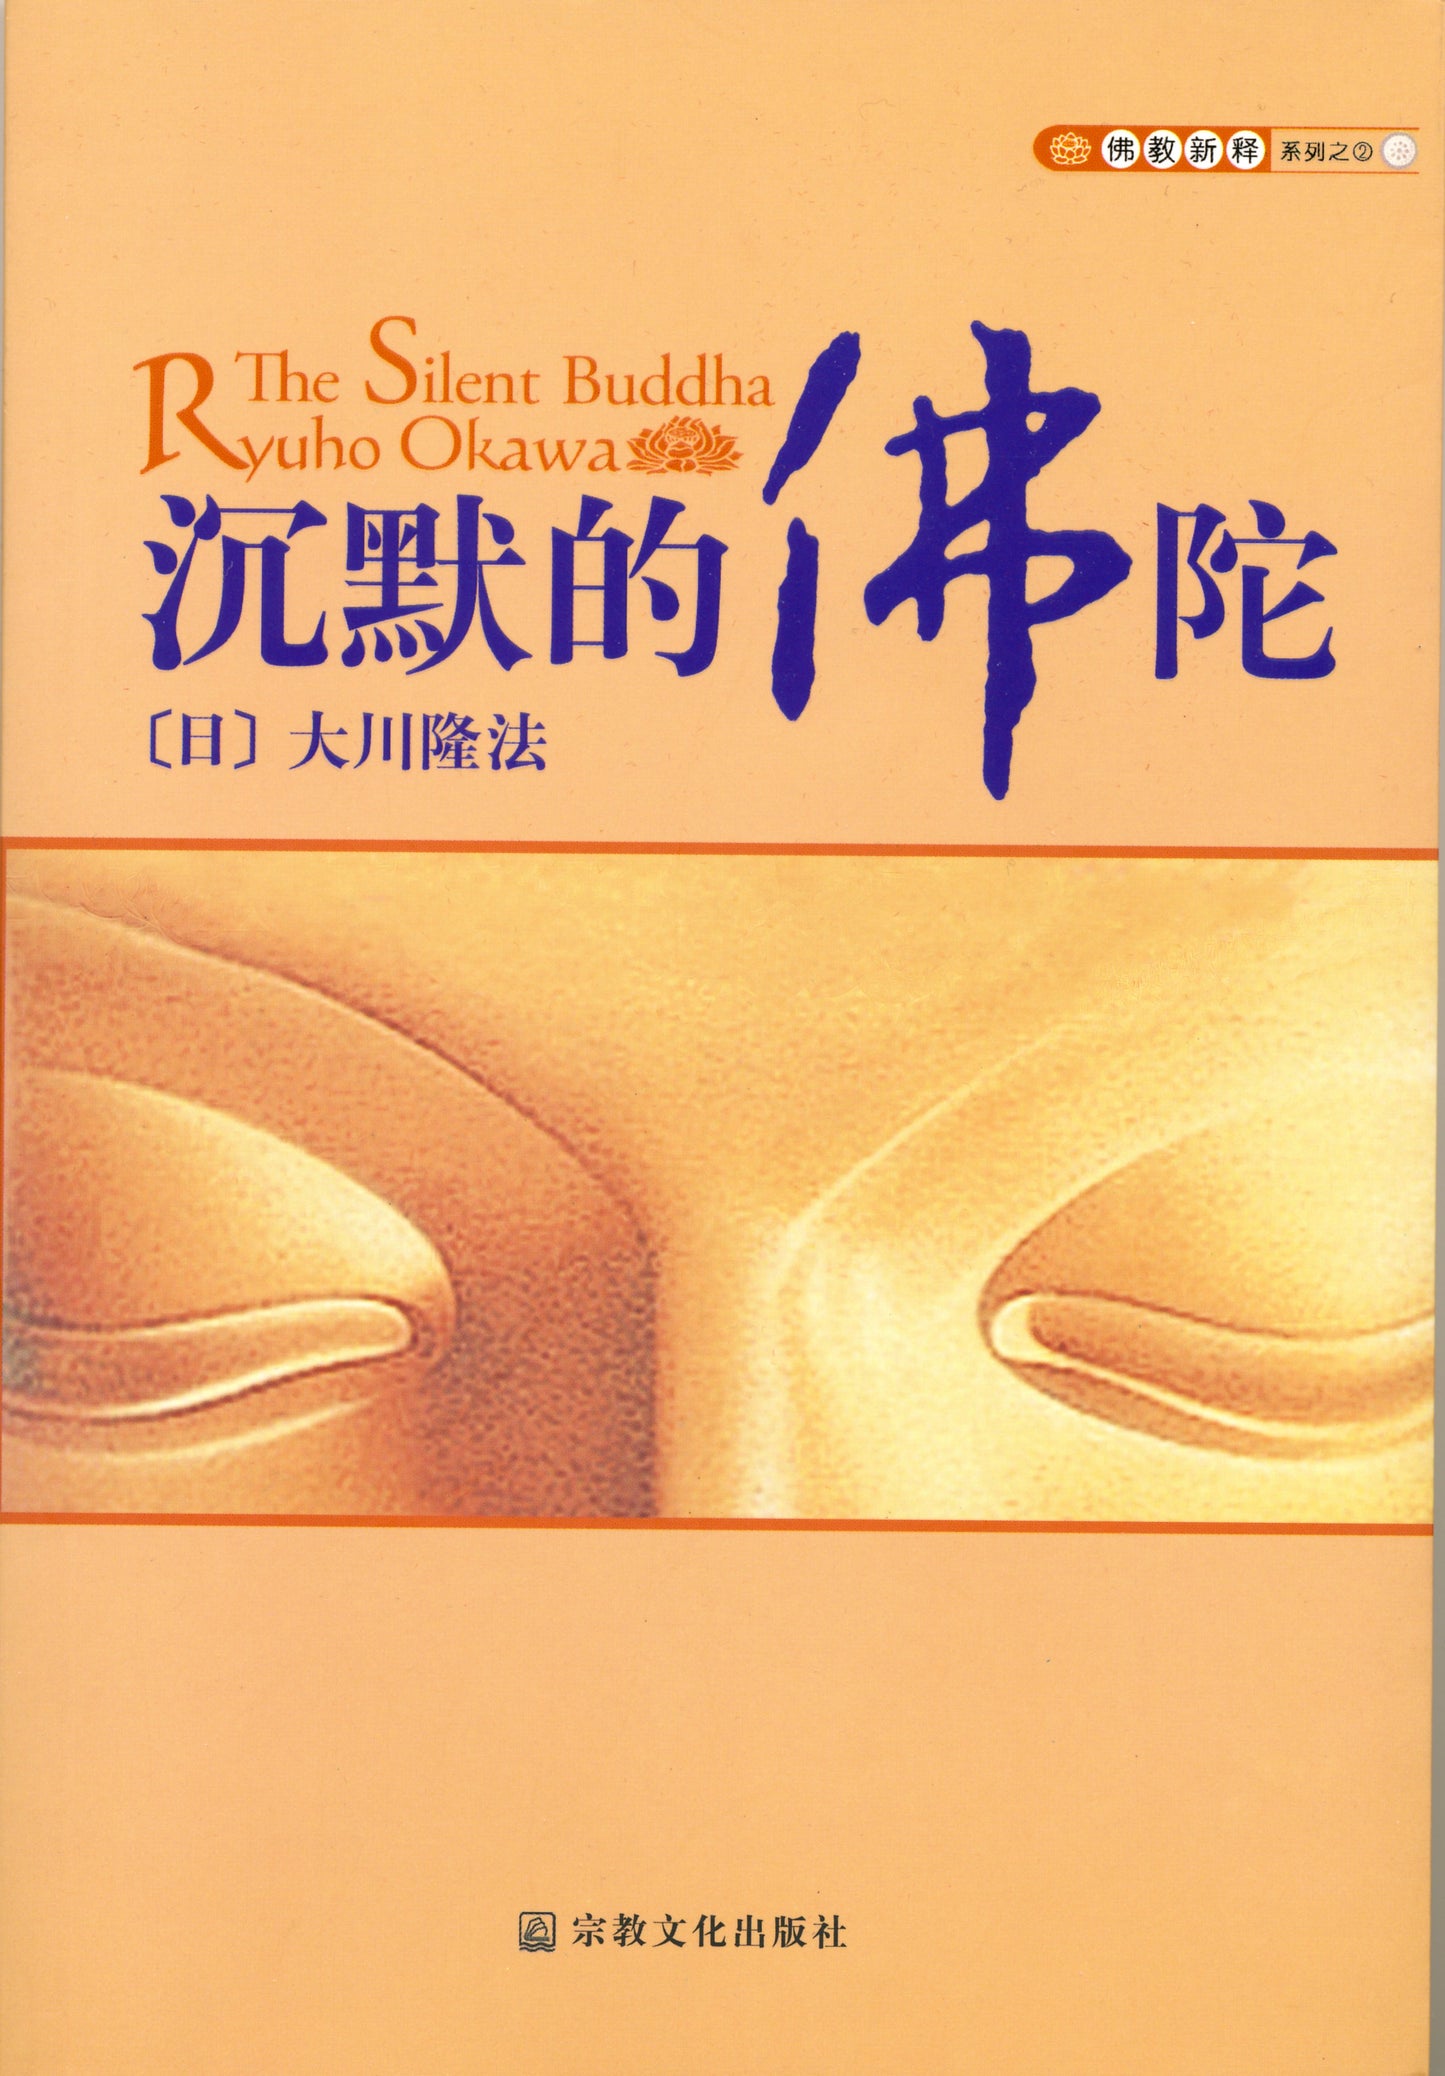 Book, The Silent Buddha, Chinese Simplified - IRH Press International